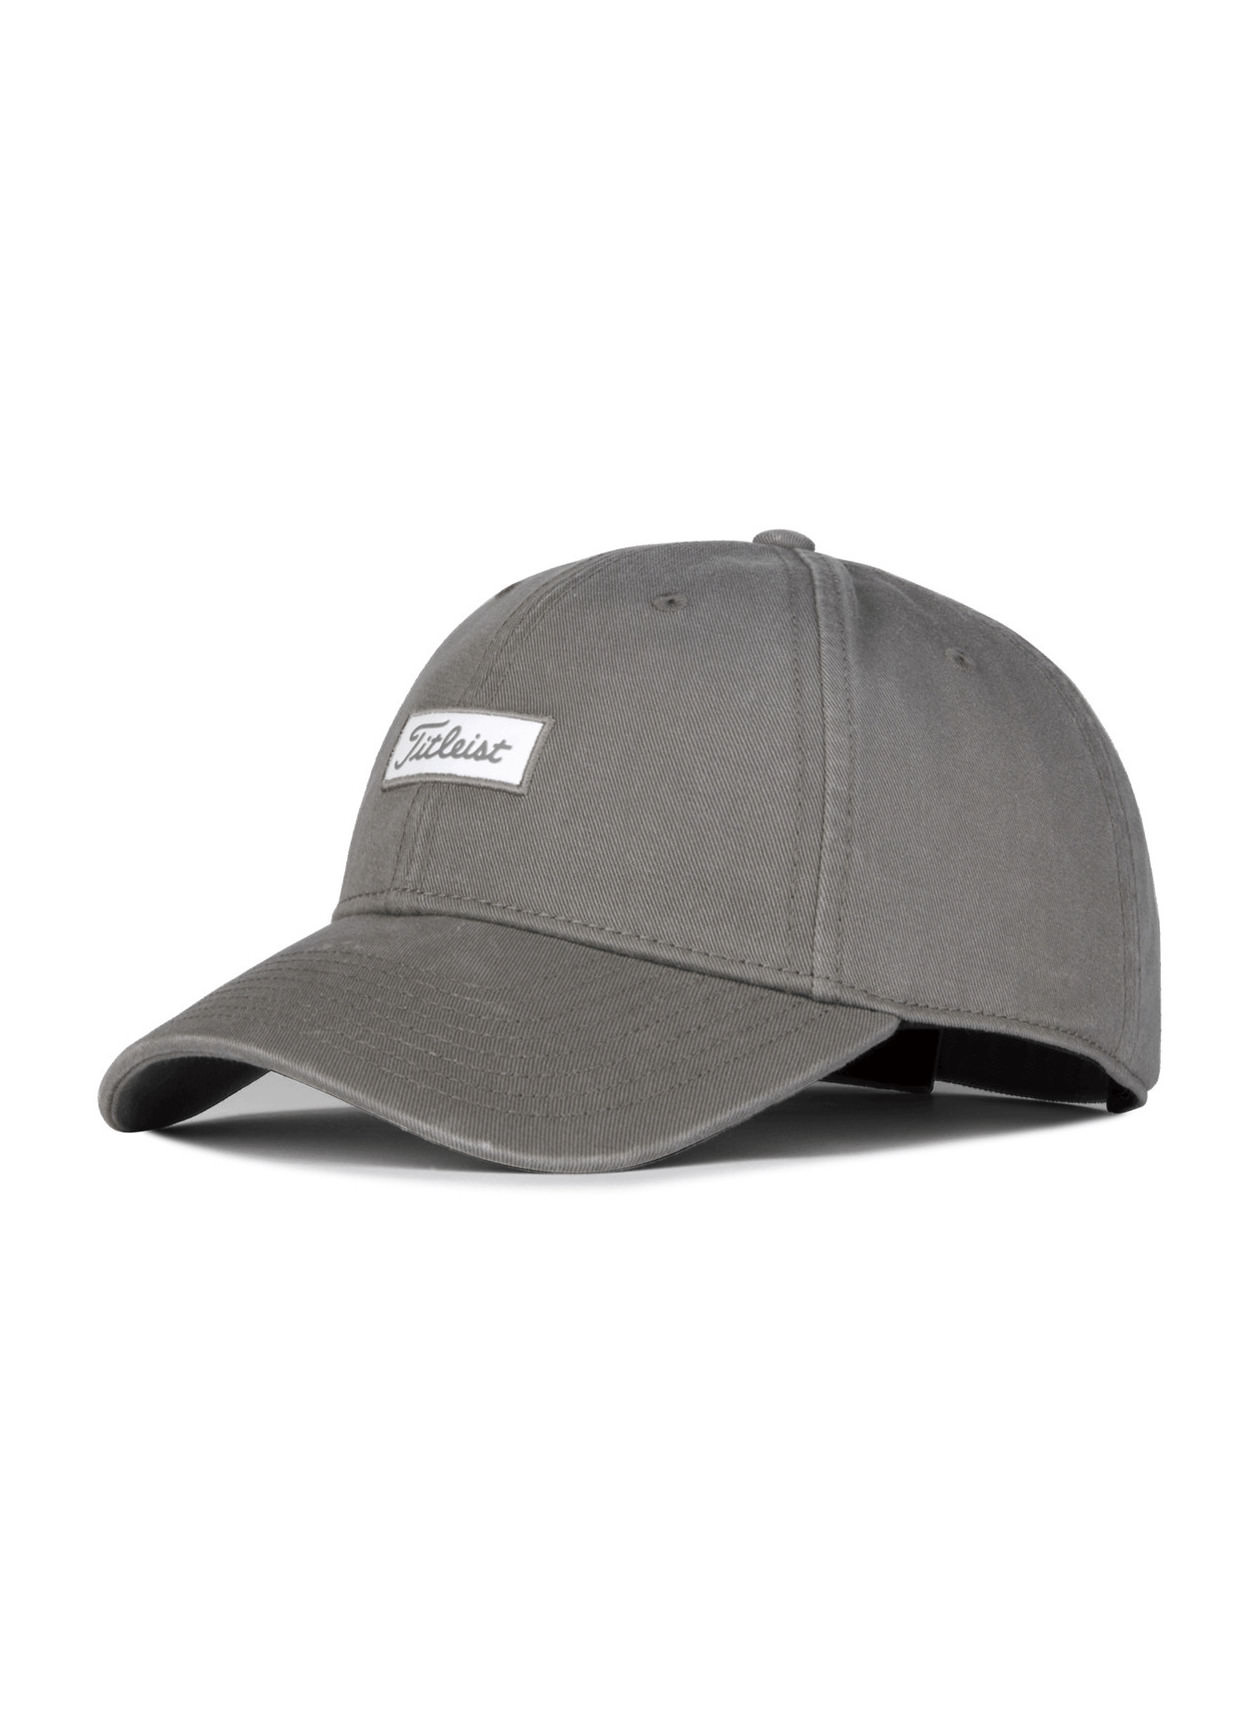 Charcoal/White Titleist Charleston Garment Washed Hat | Titleist